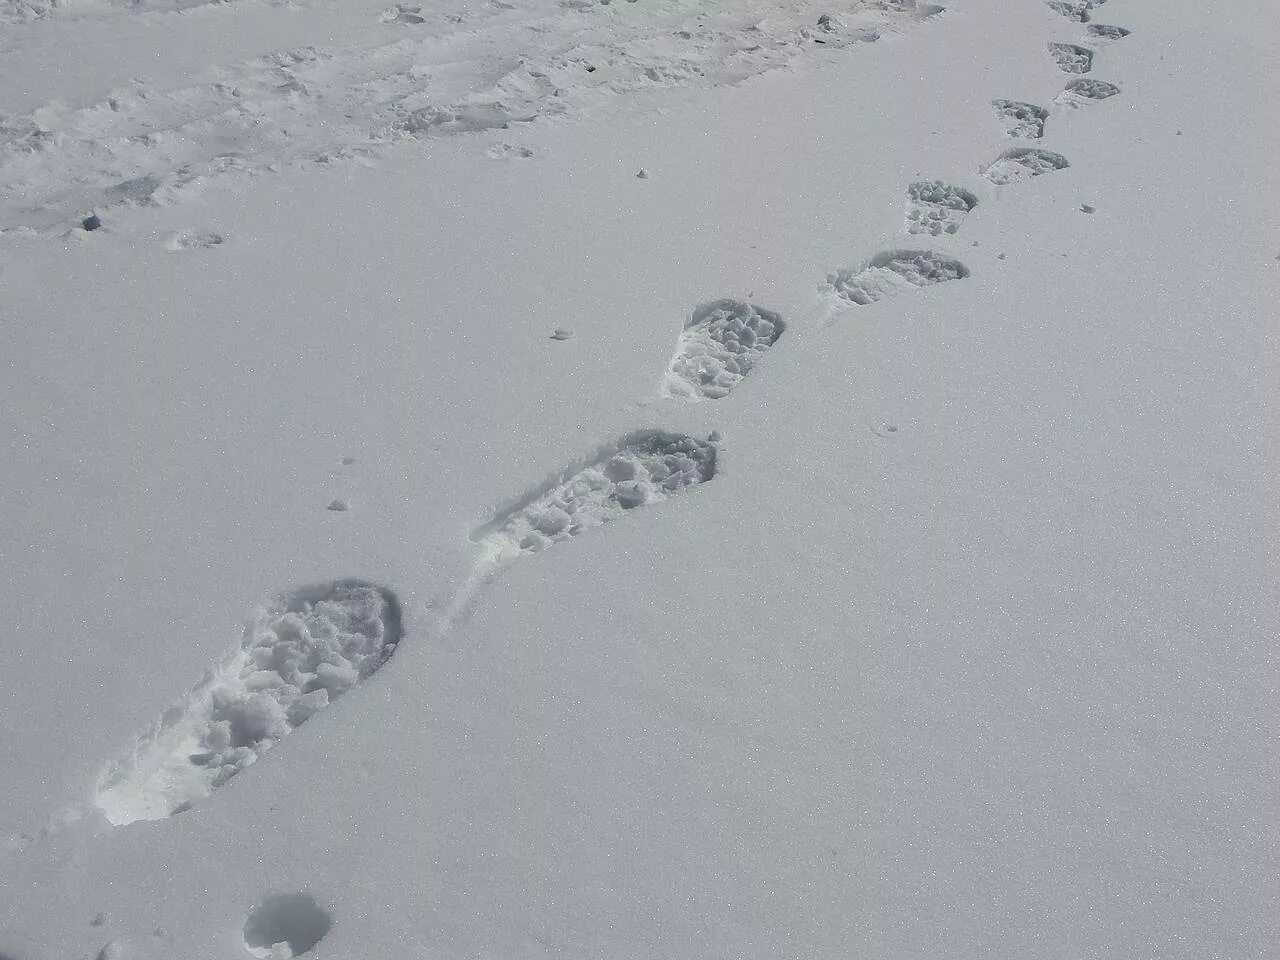 Дорожка следов. Дорожка следов обуви. Дорожка следов на снегу. Следы обуви на снегу криминалистика.